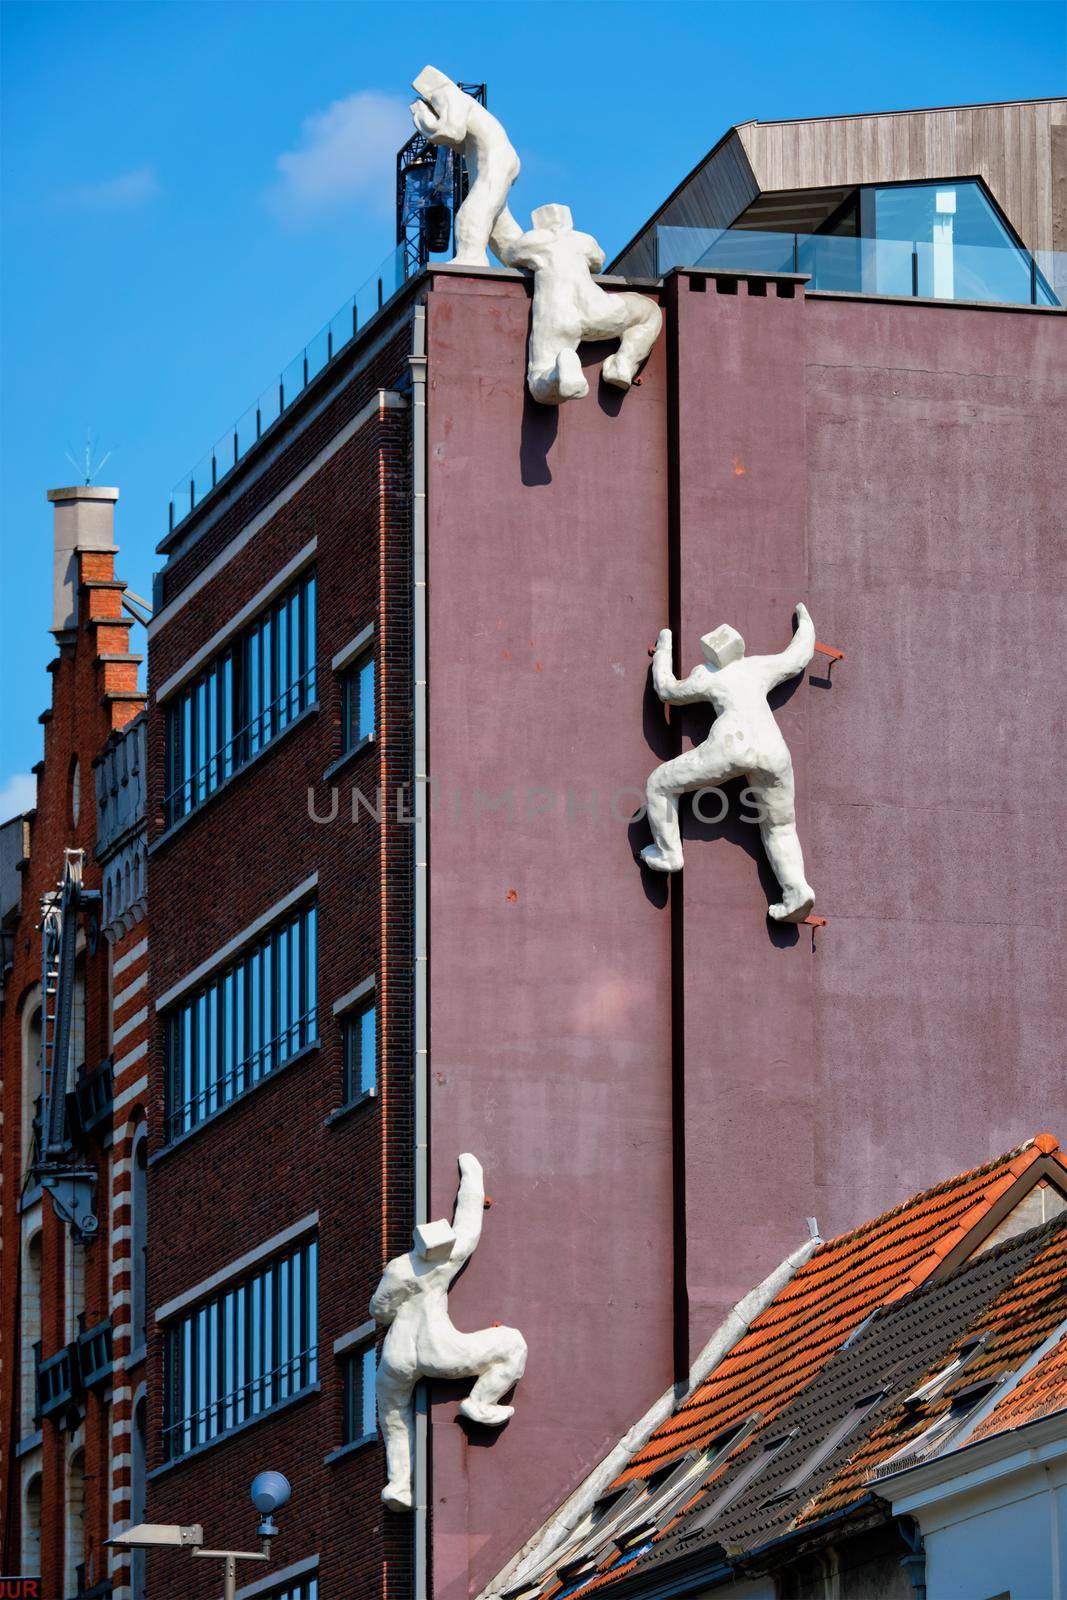 De fluisteraar' (The whisperer) statue in Antwerp, Belgium by dimol